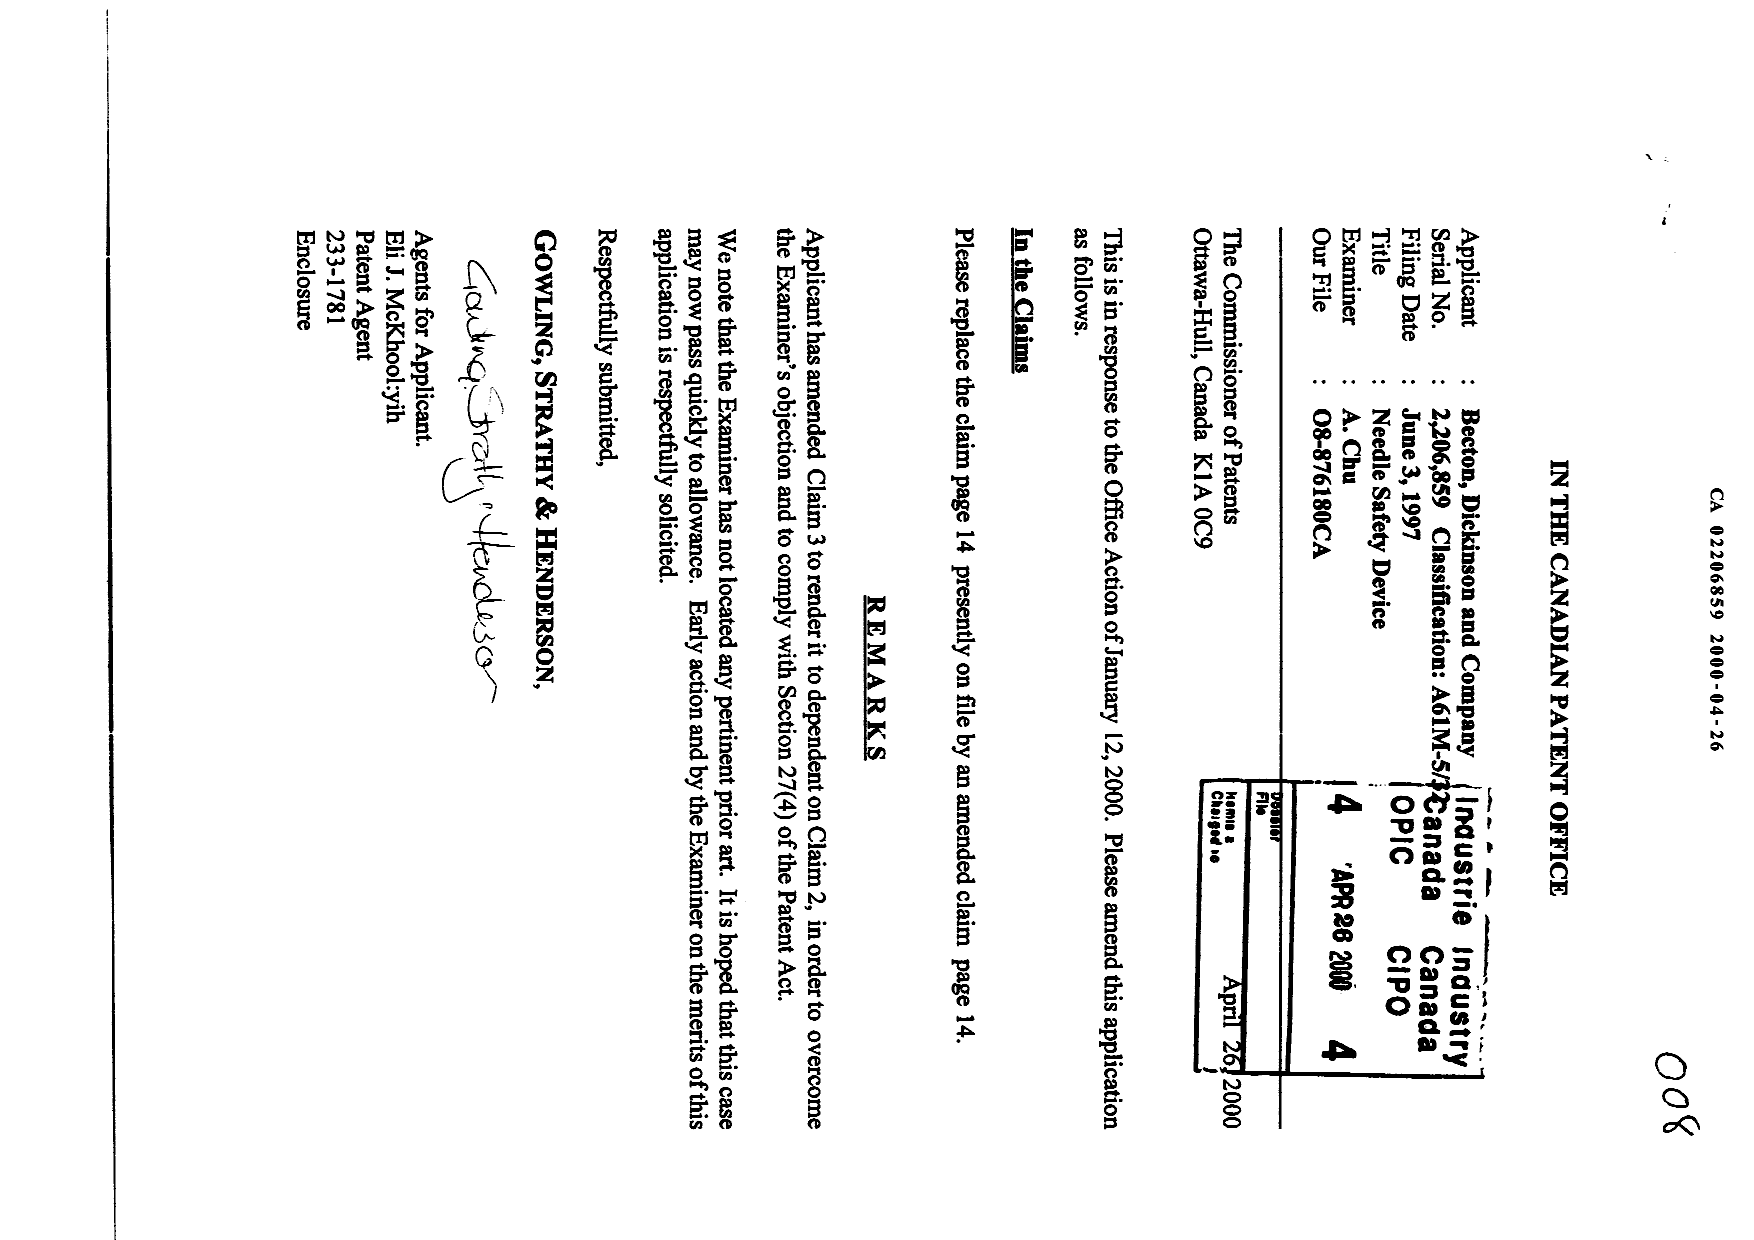 Canadian Patent Document 2206859. Prosecution-Amendment 20000426. Image 1 of 2